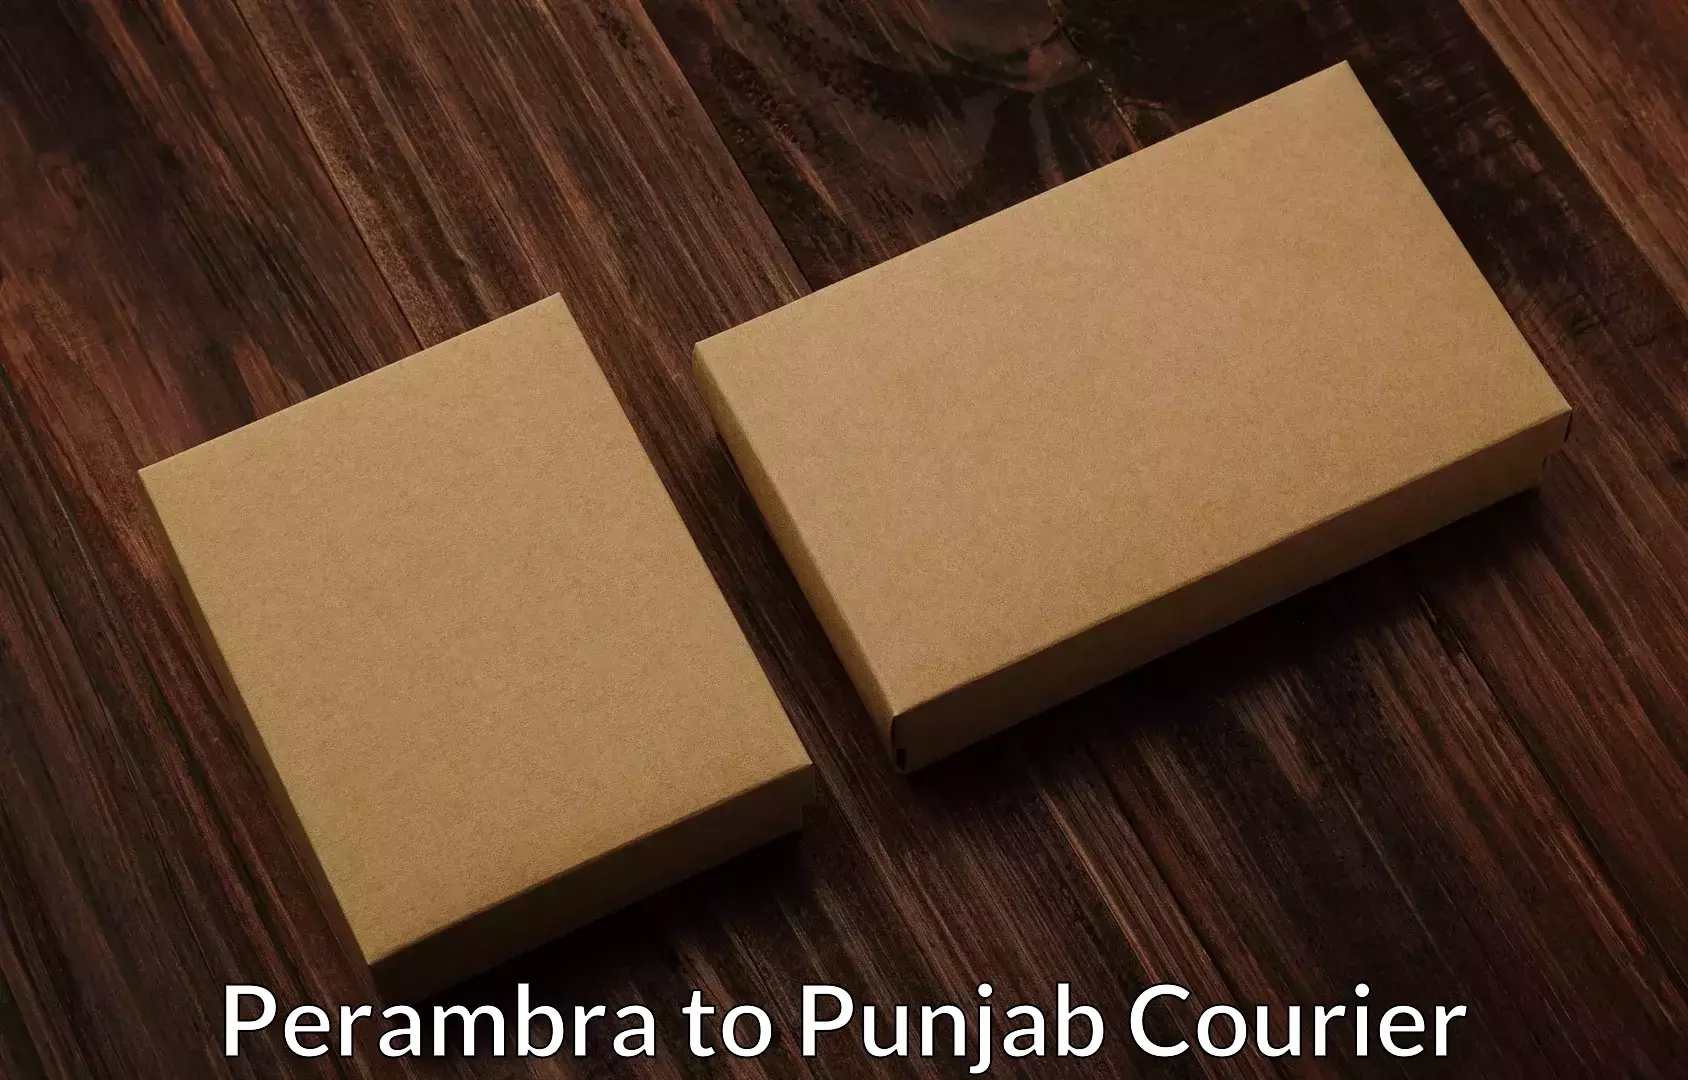 Full-service movers Perambra to Punjab